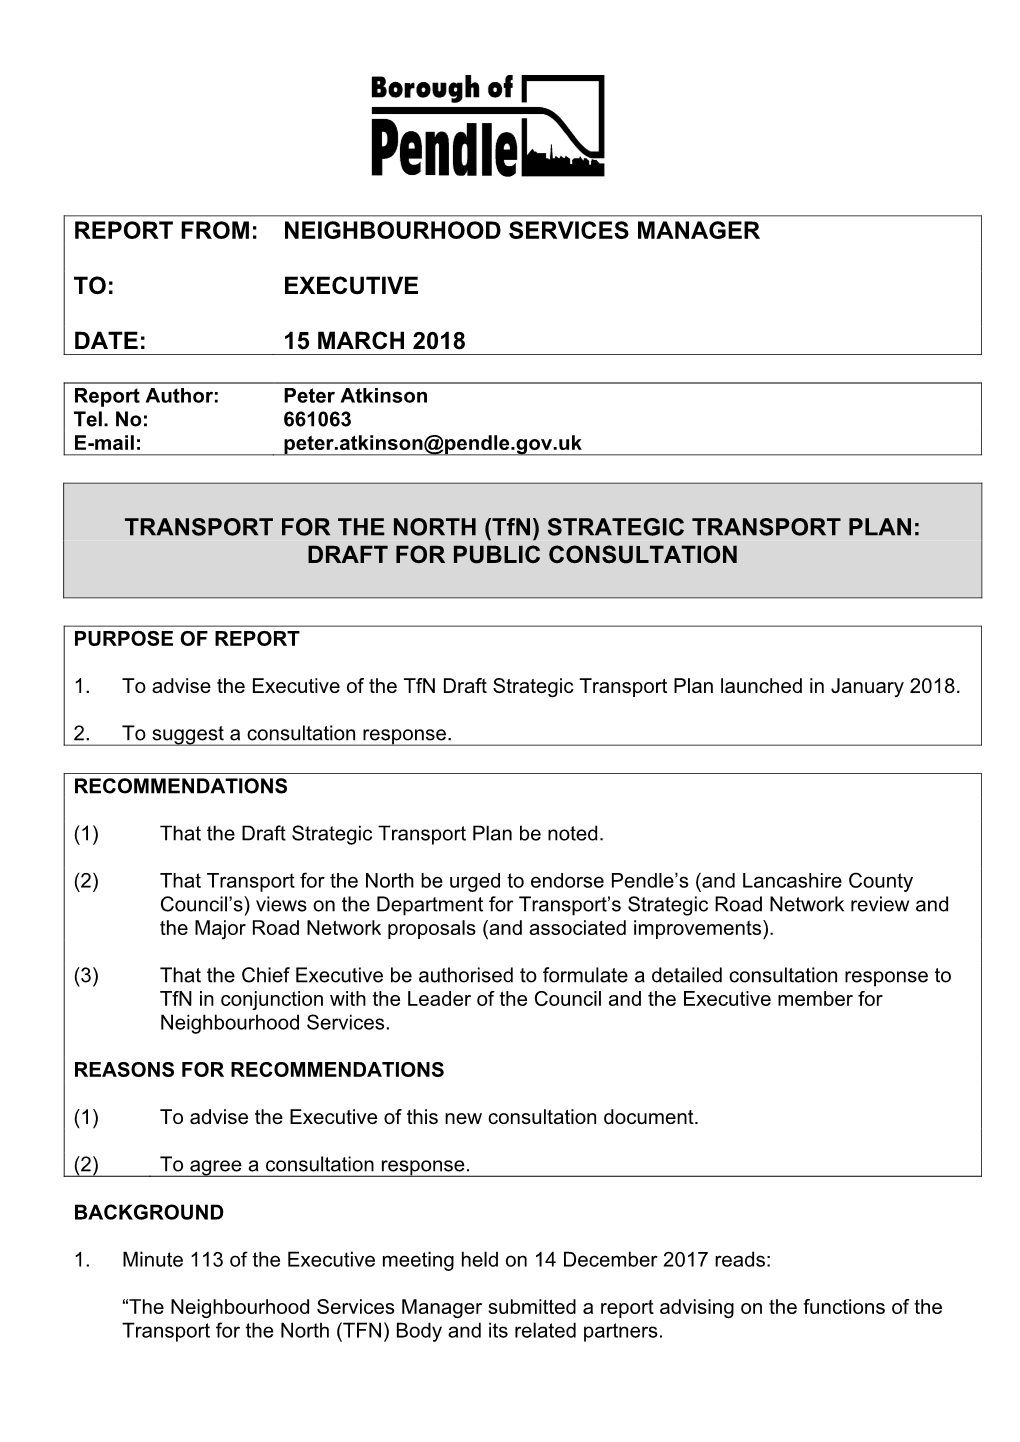 Strategic Transport Plan: Draft for Public Consultation